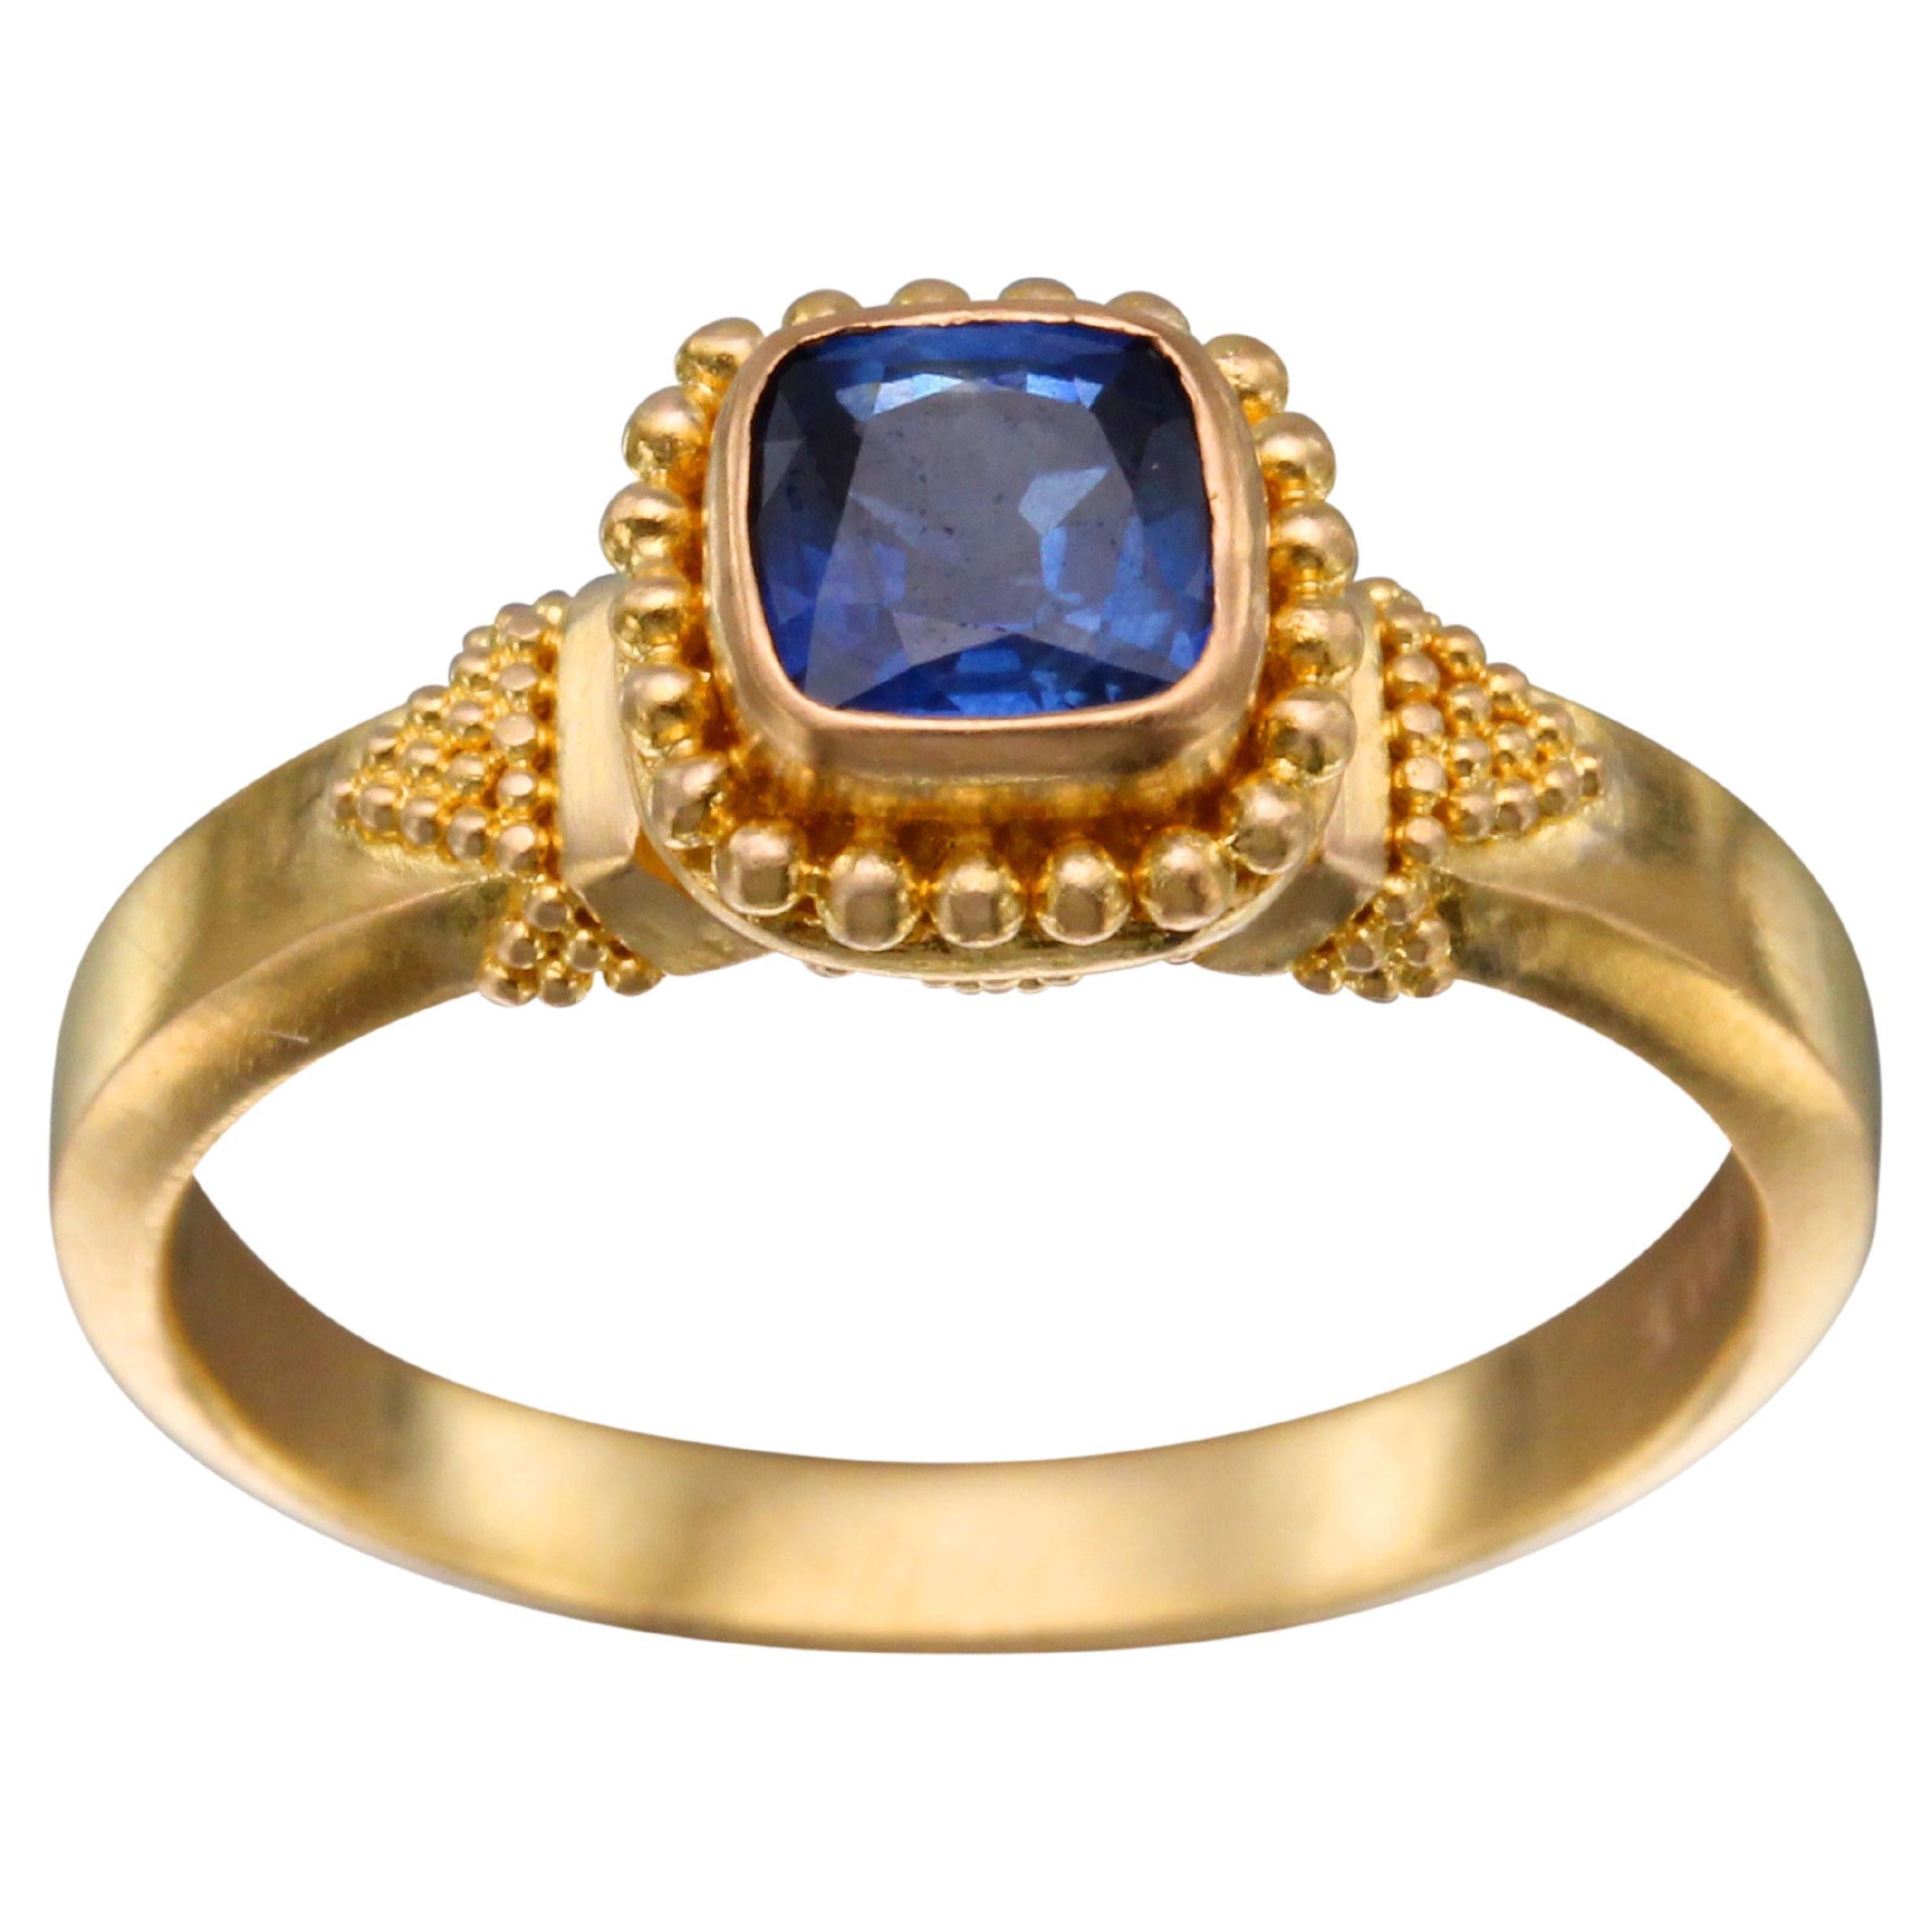 Steven Battelle 0.7 Carats Blue Sapphire 22k Gold Ring